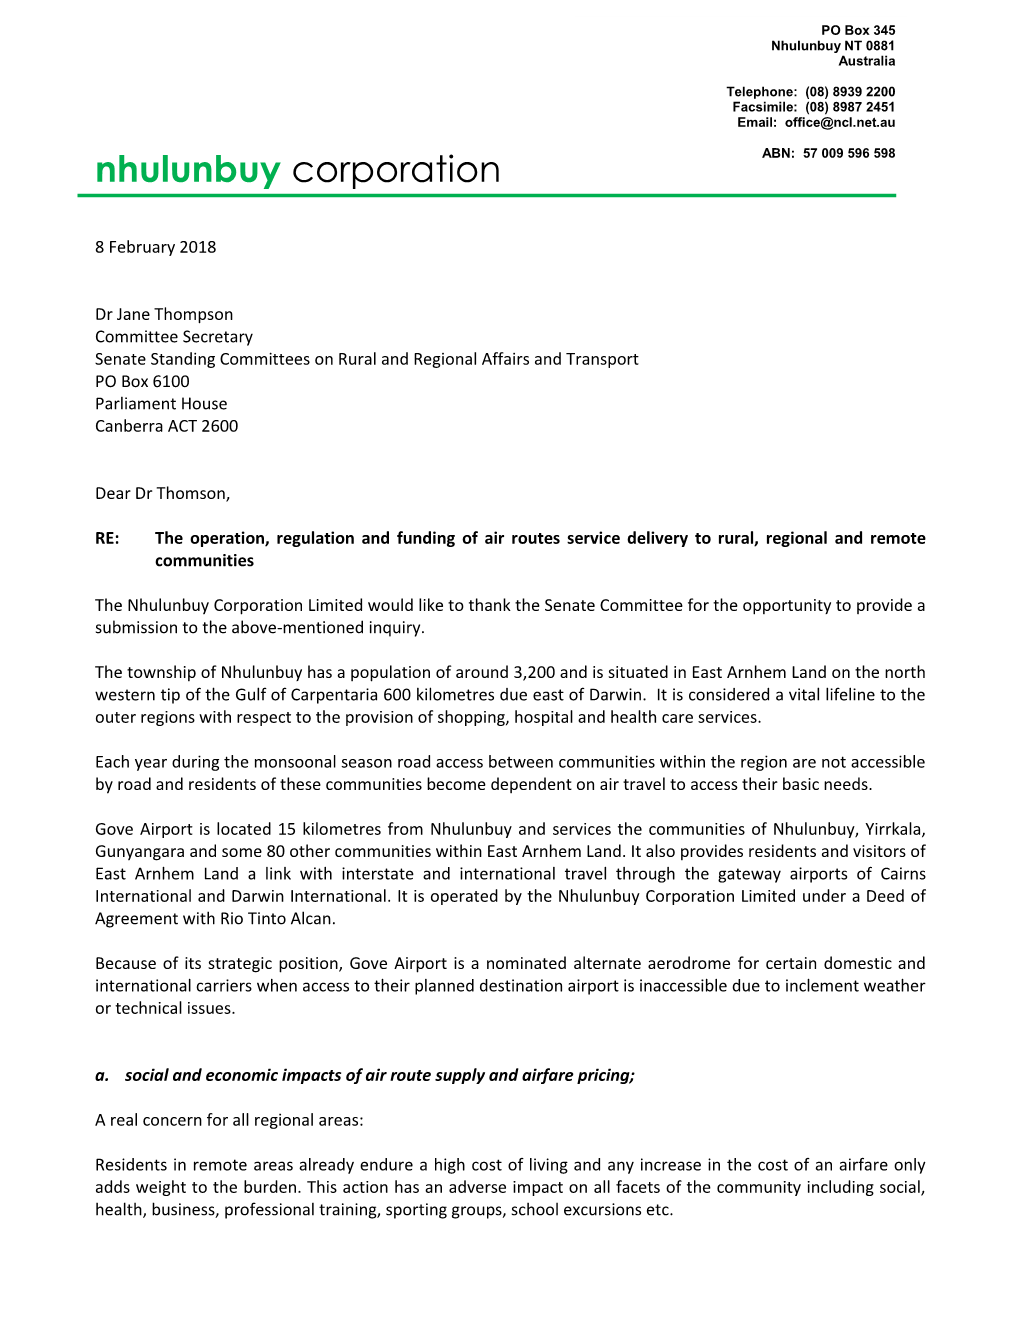 Nhulunbuy Corporation ABN: 57 009 596 598